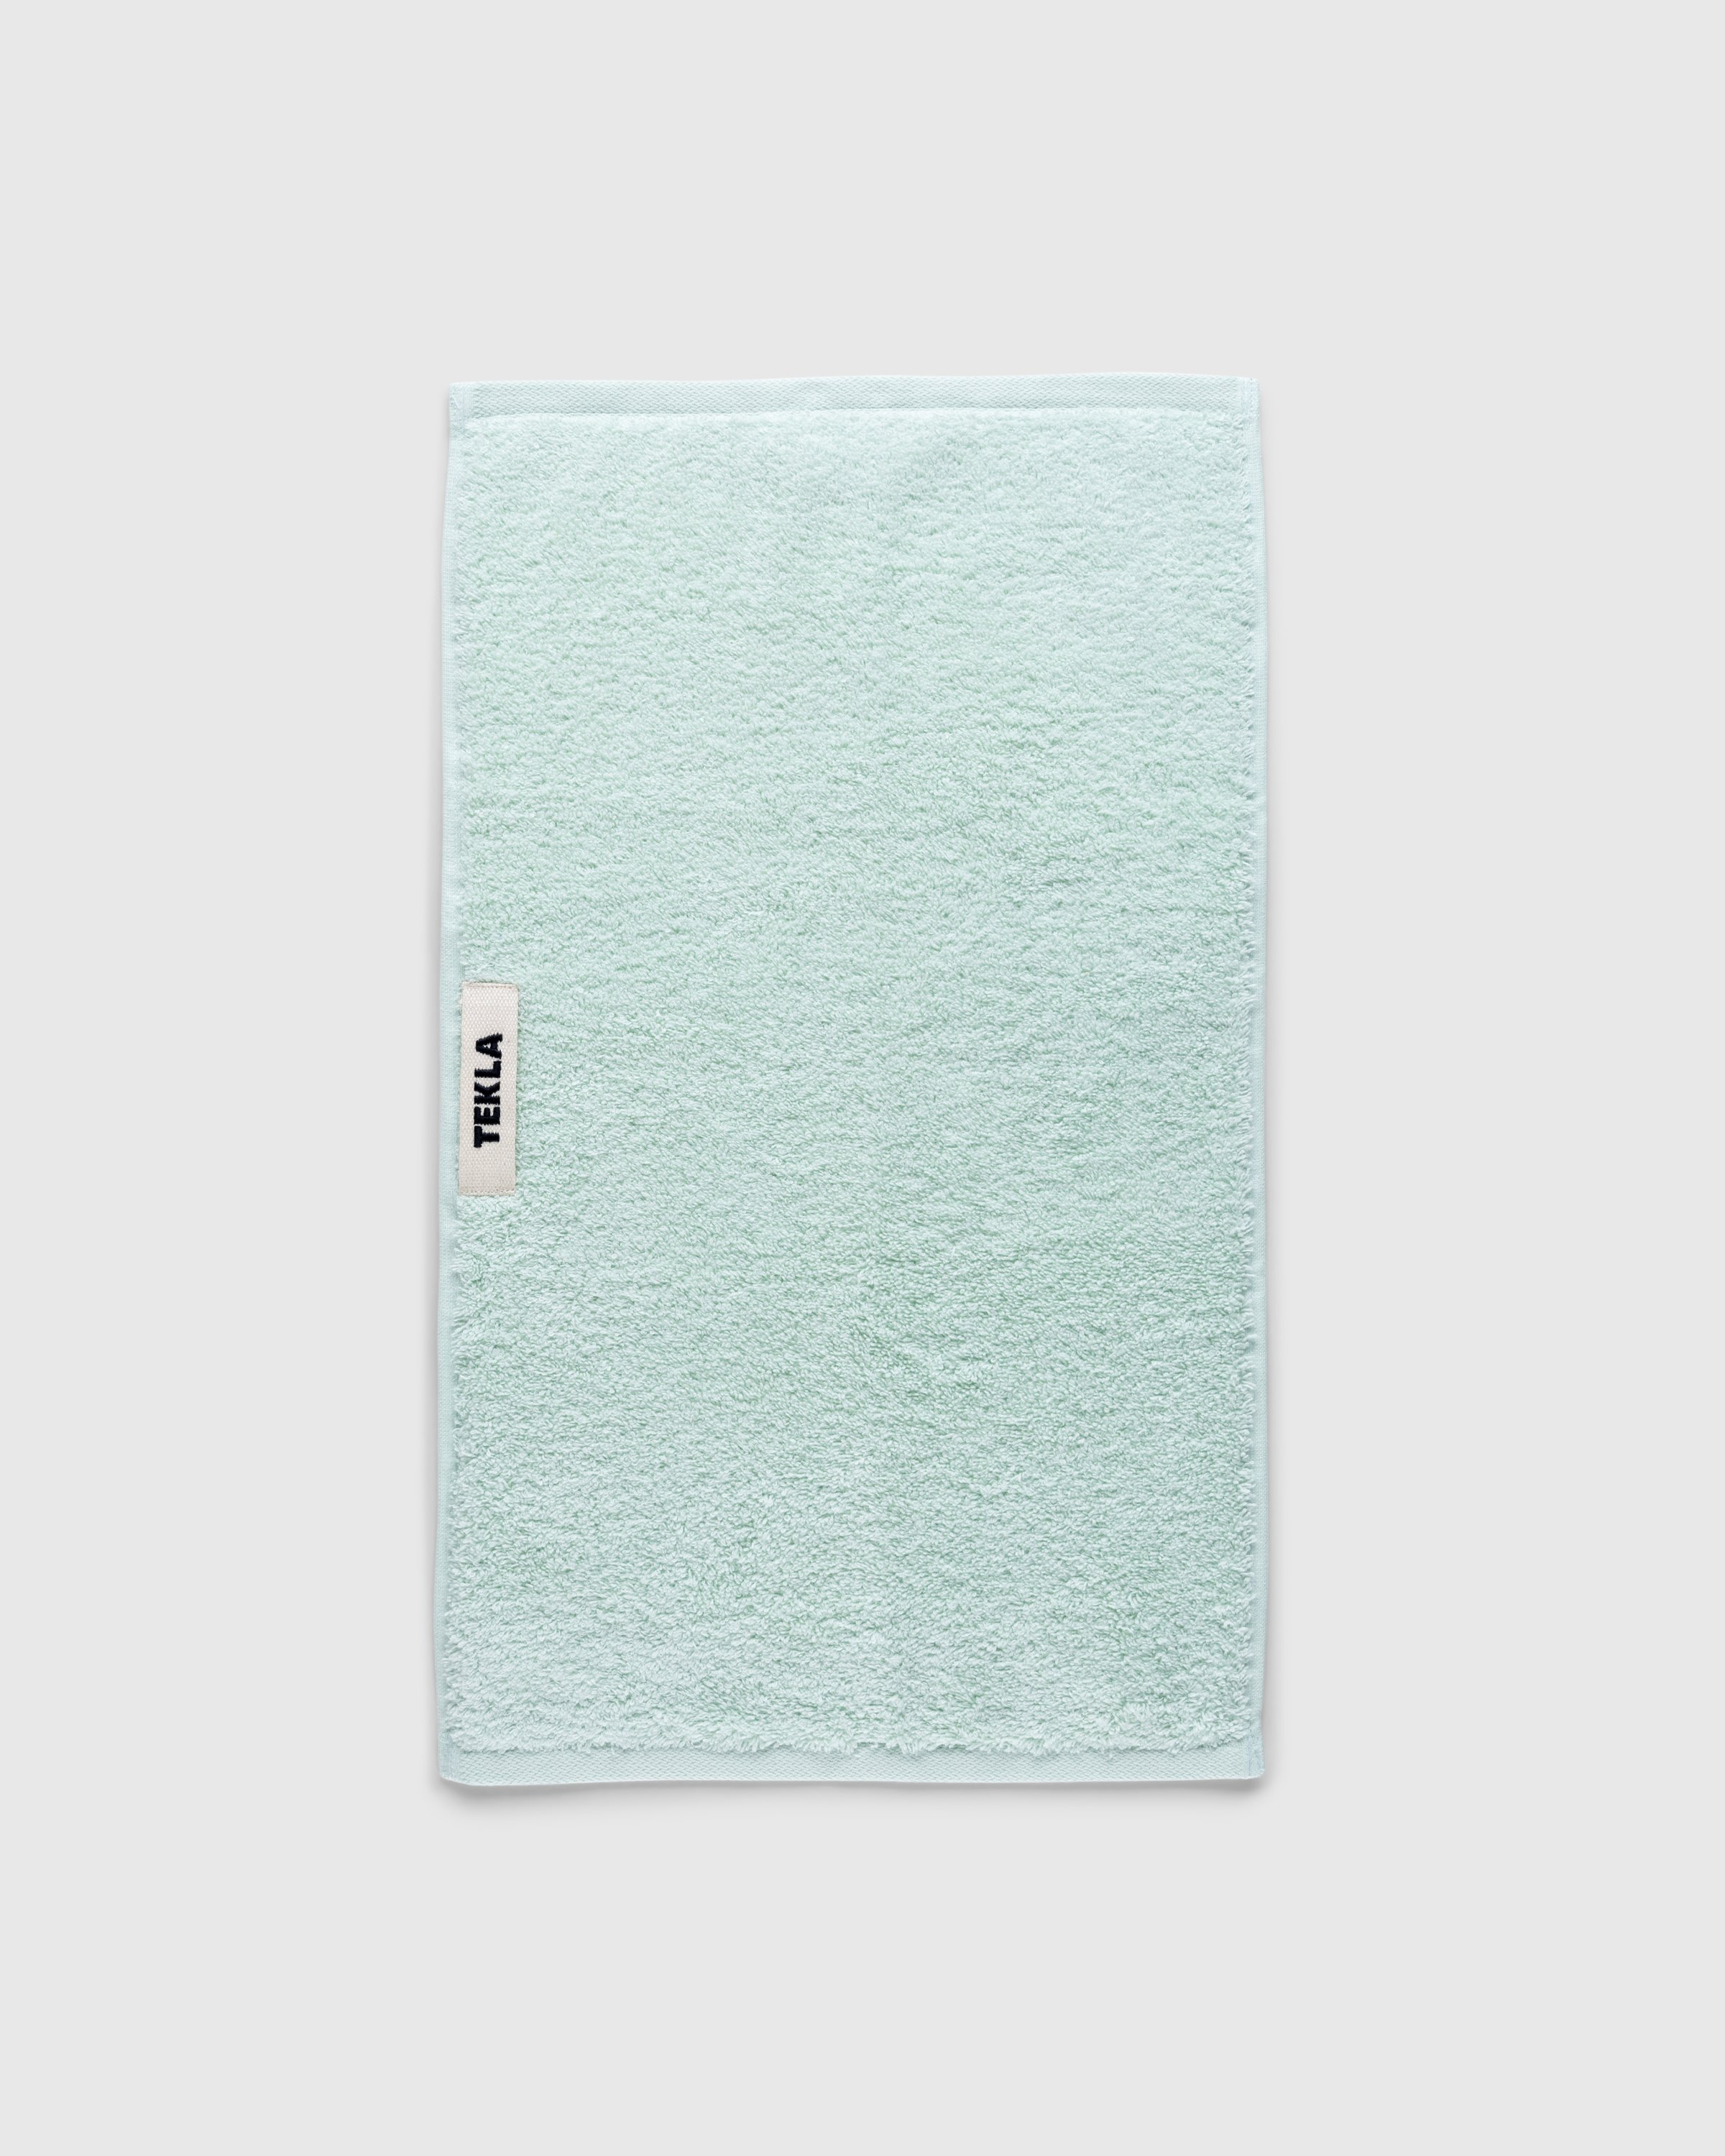 Tekla - Guest Towel Mint - Lifestyle - Green - Image 2